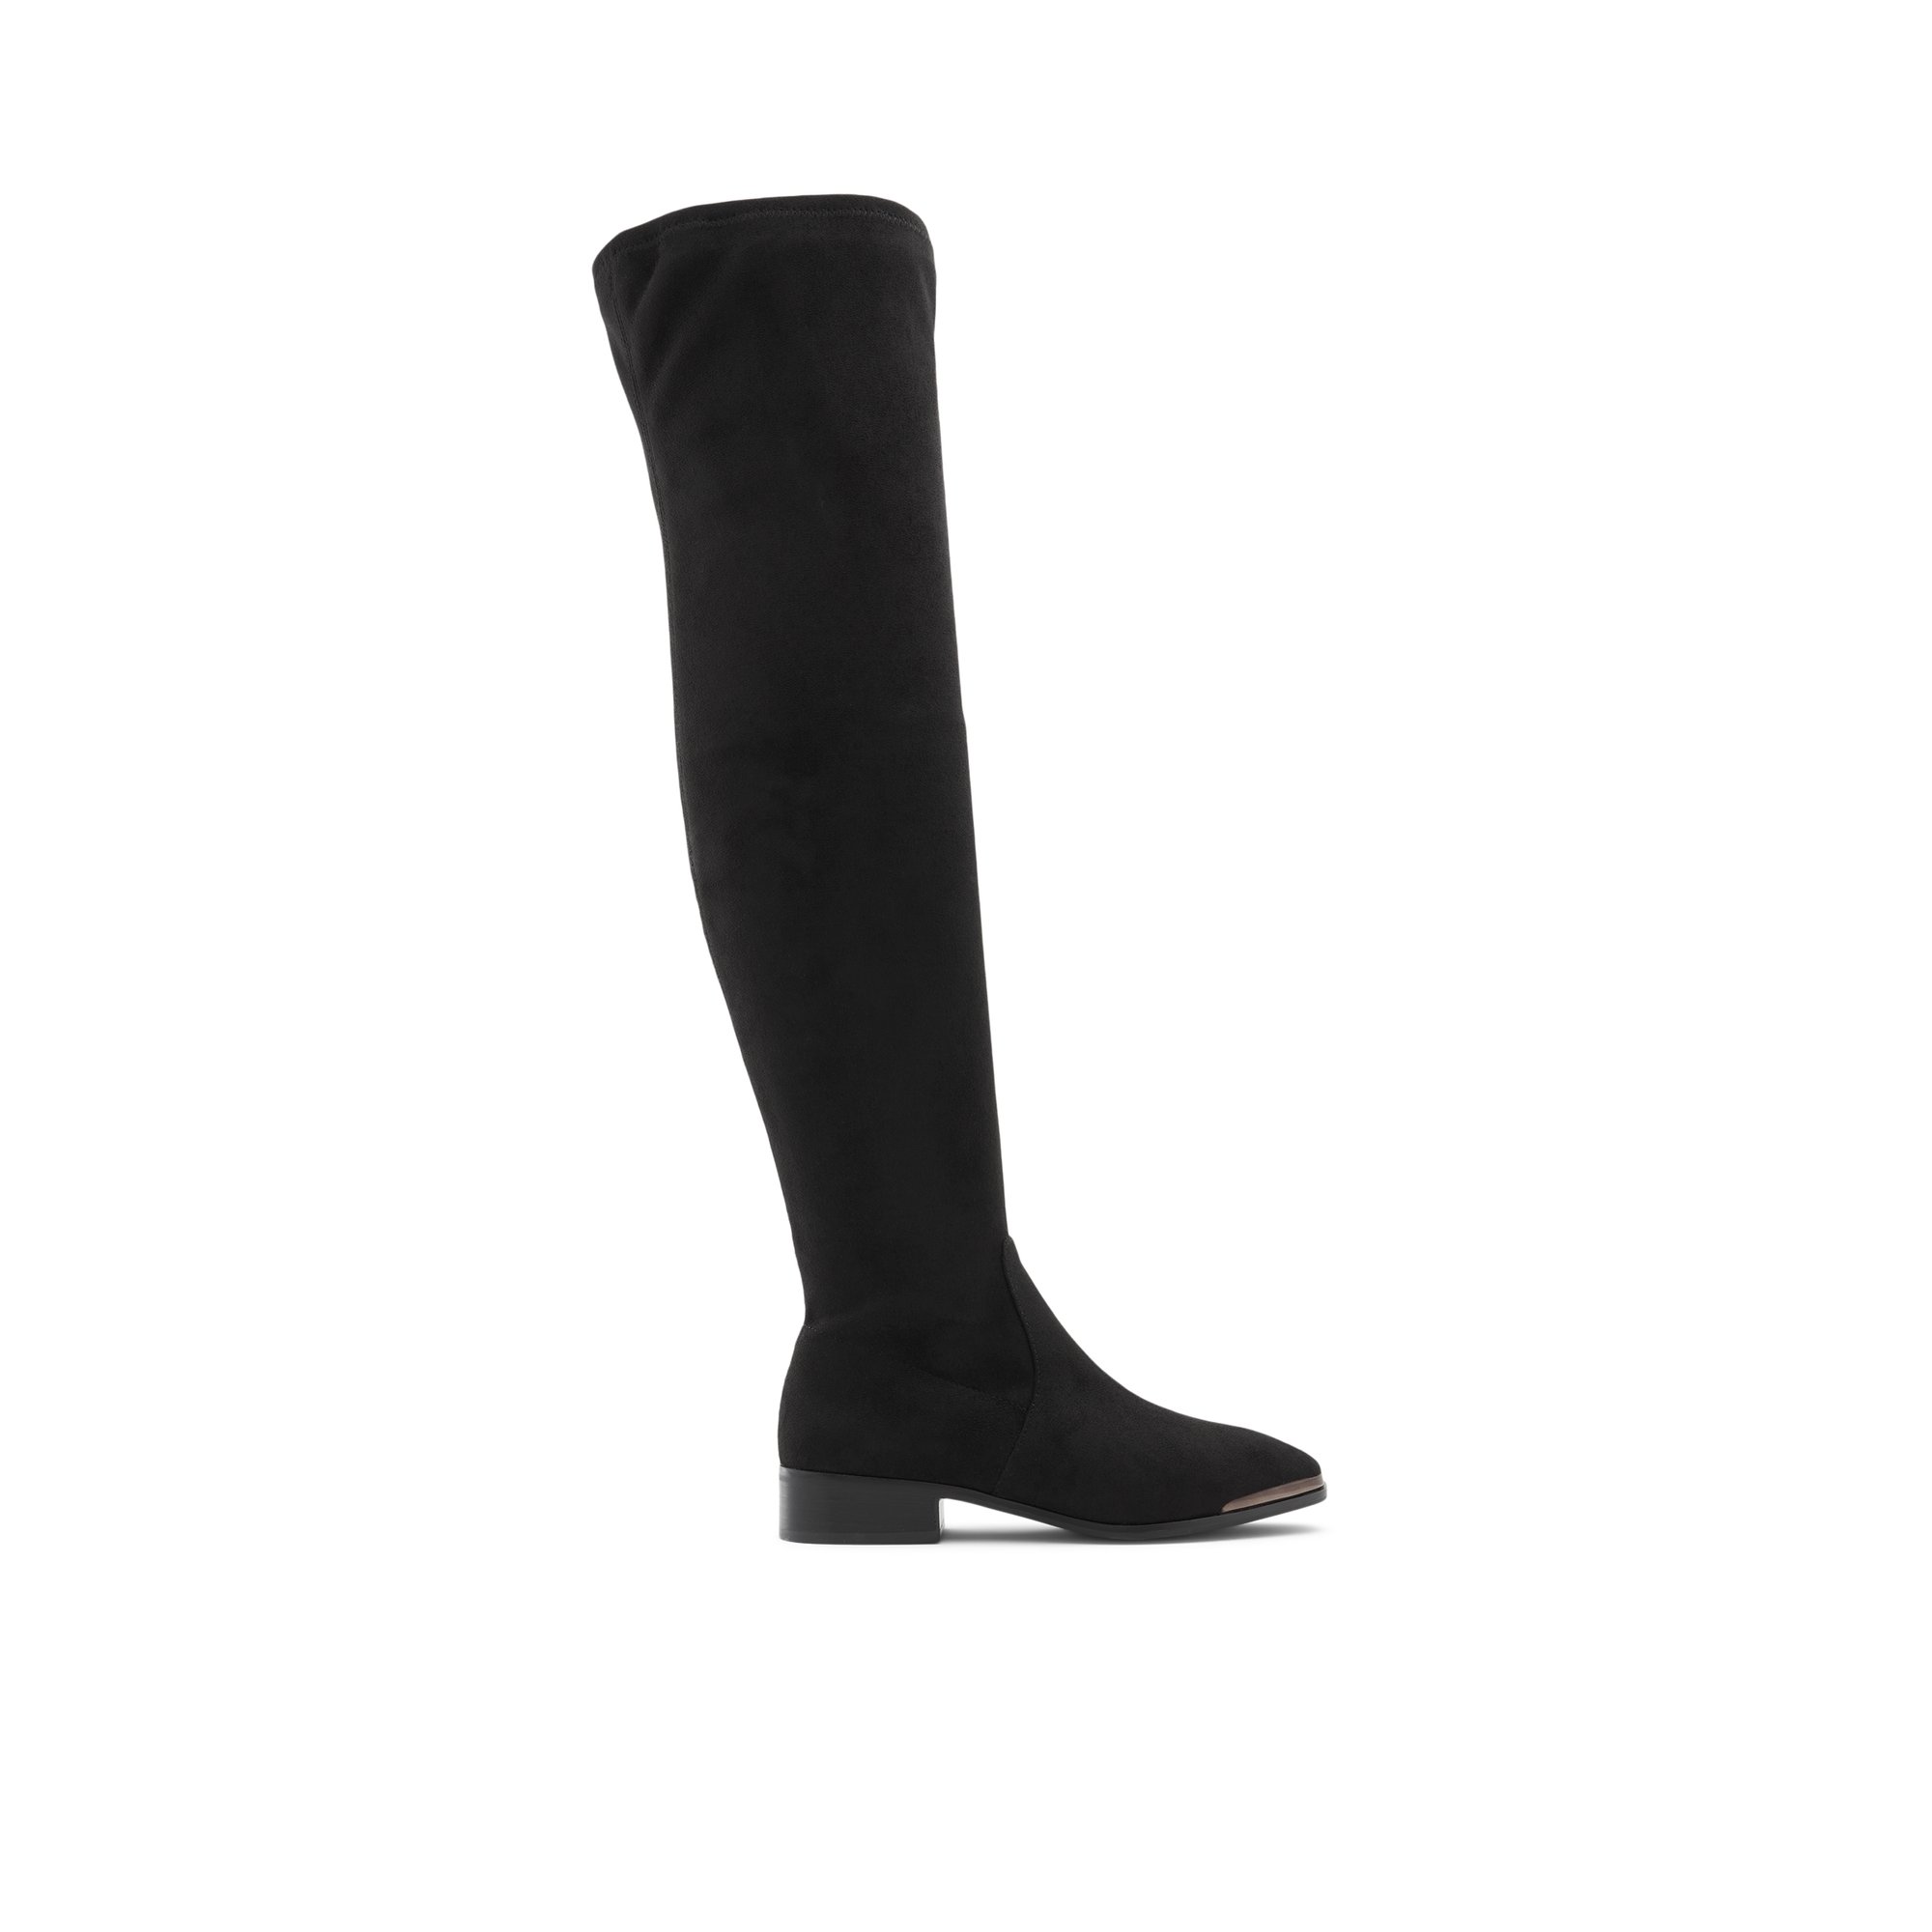 ALDO Sevaunna - Women's Casual Boot - Black